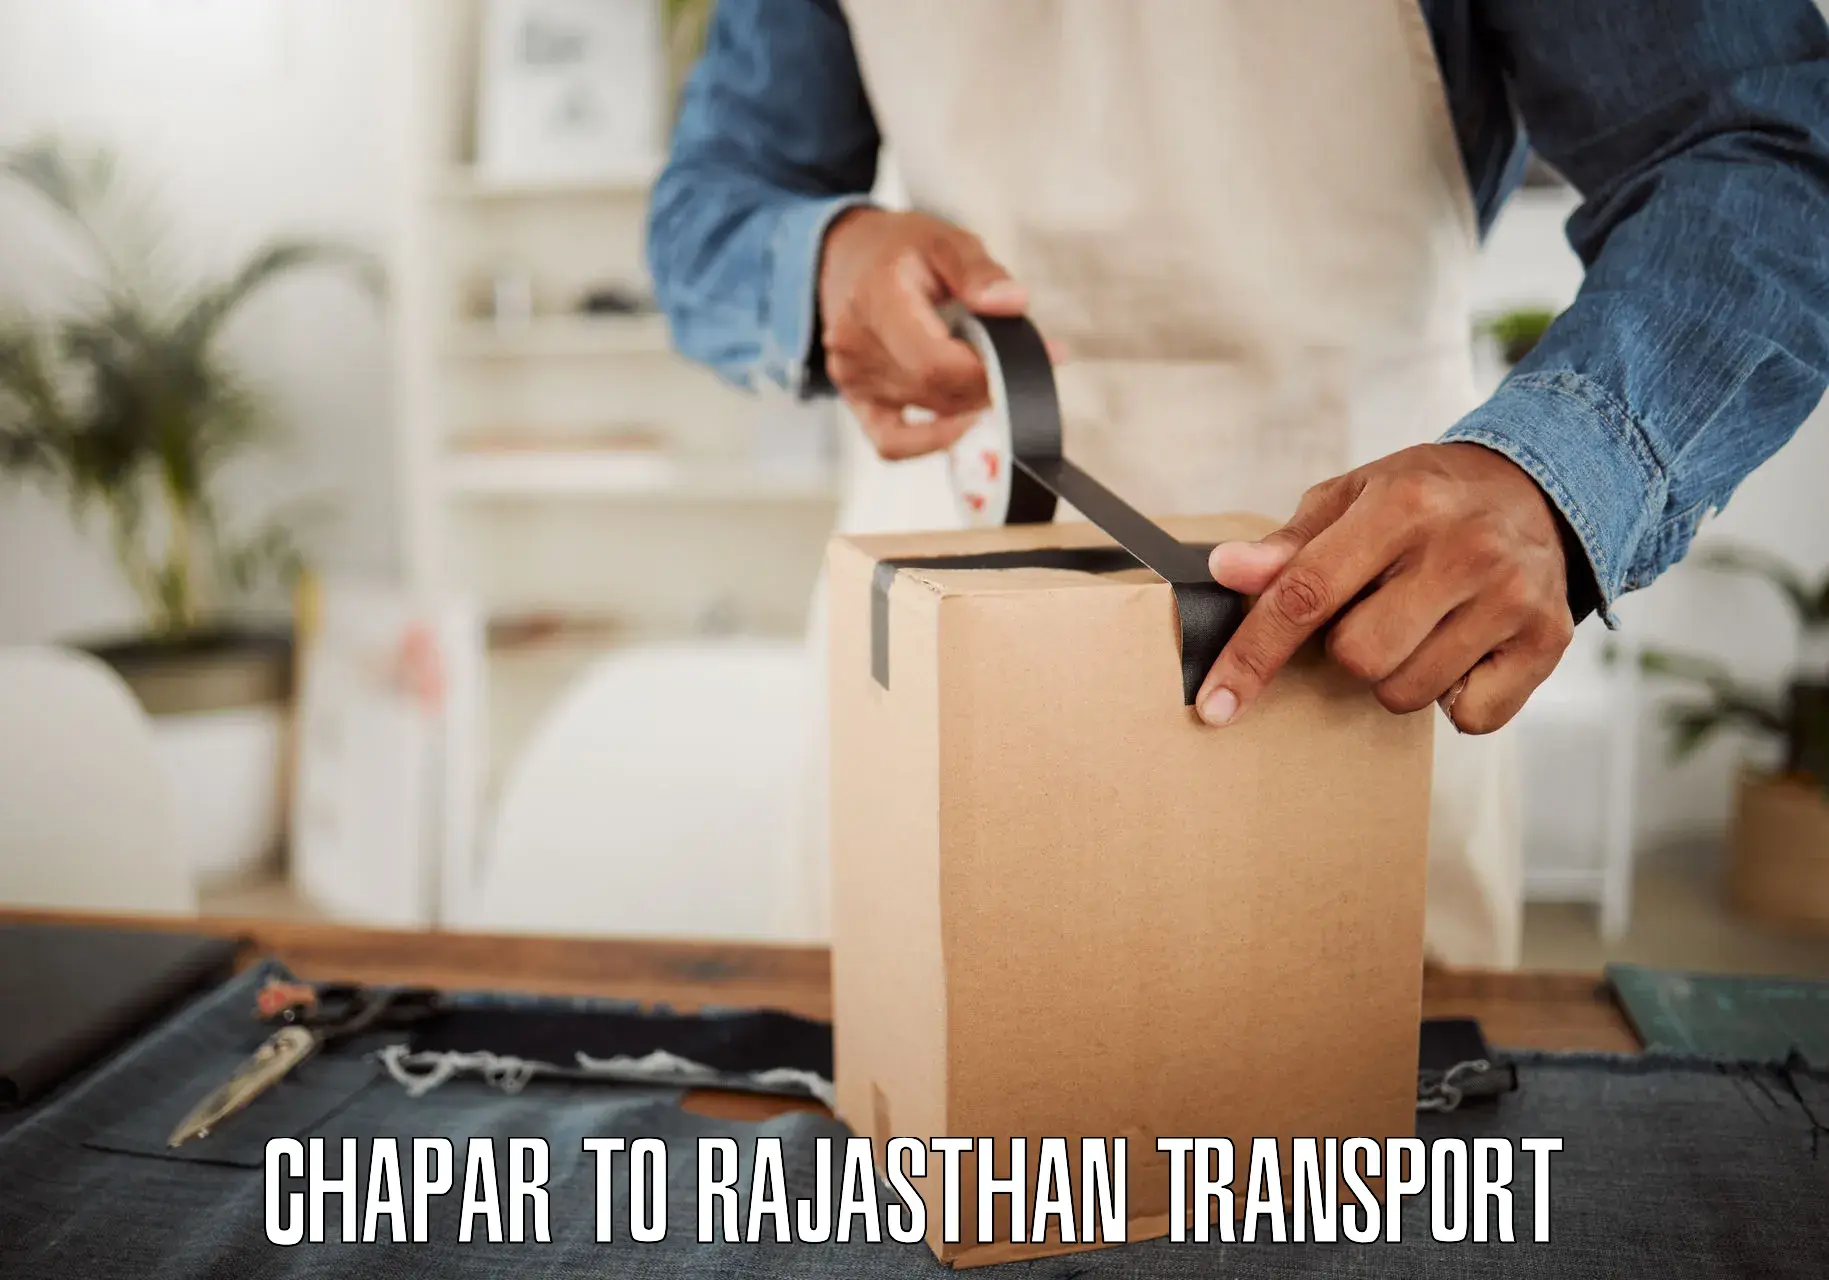 Shipping partner Chapar to Sultana